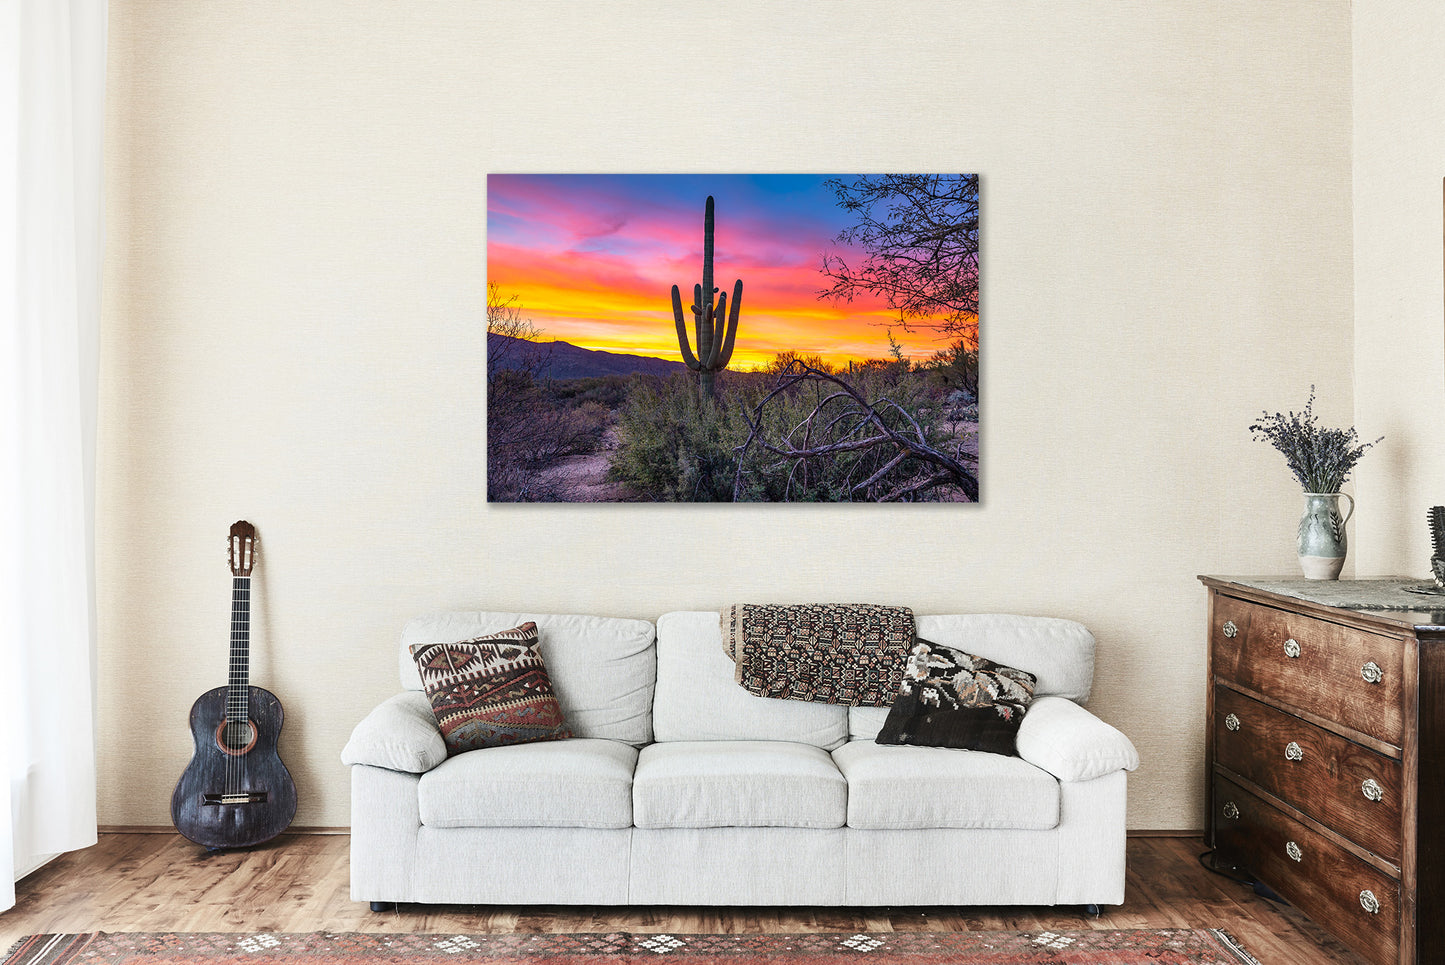 Cactus Canvas Wall Art - Gallery Wrap of Saguaro and Colorful Sunrise in Sonoran Desert Arizona - Southwestern Photography Artwork Decor